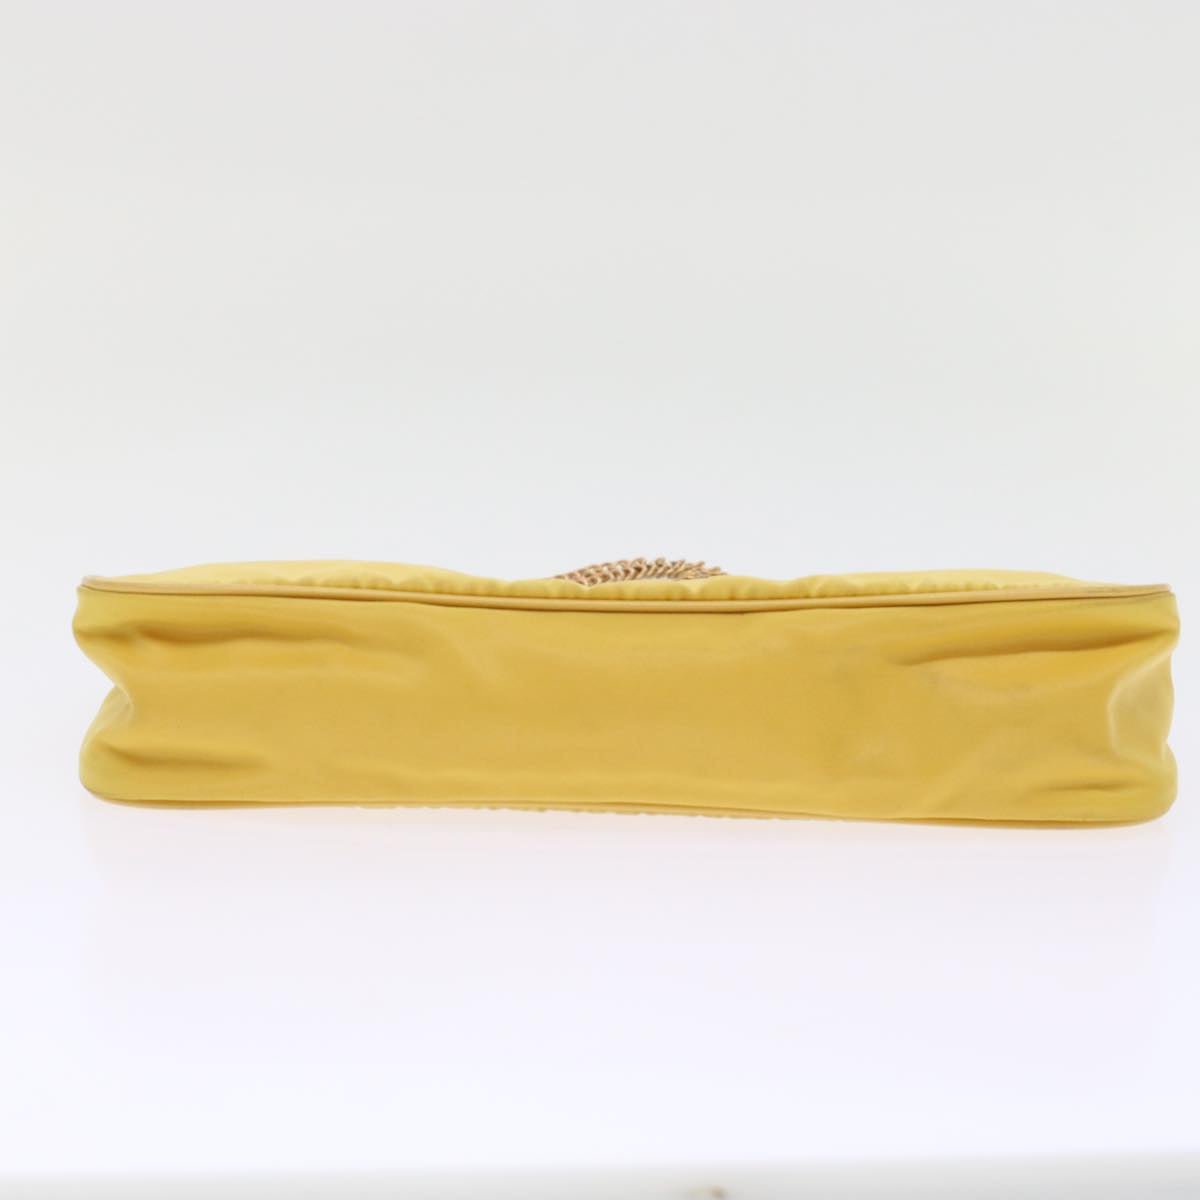 PRADA Chain Shoulder Bag Nylon Yellow Auth hk780